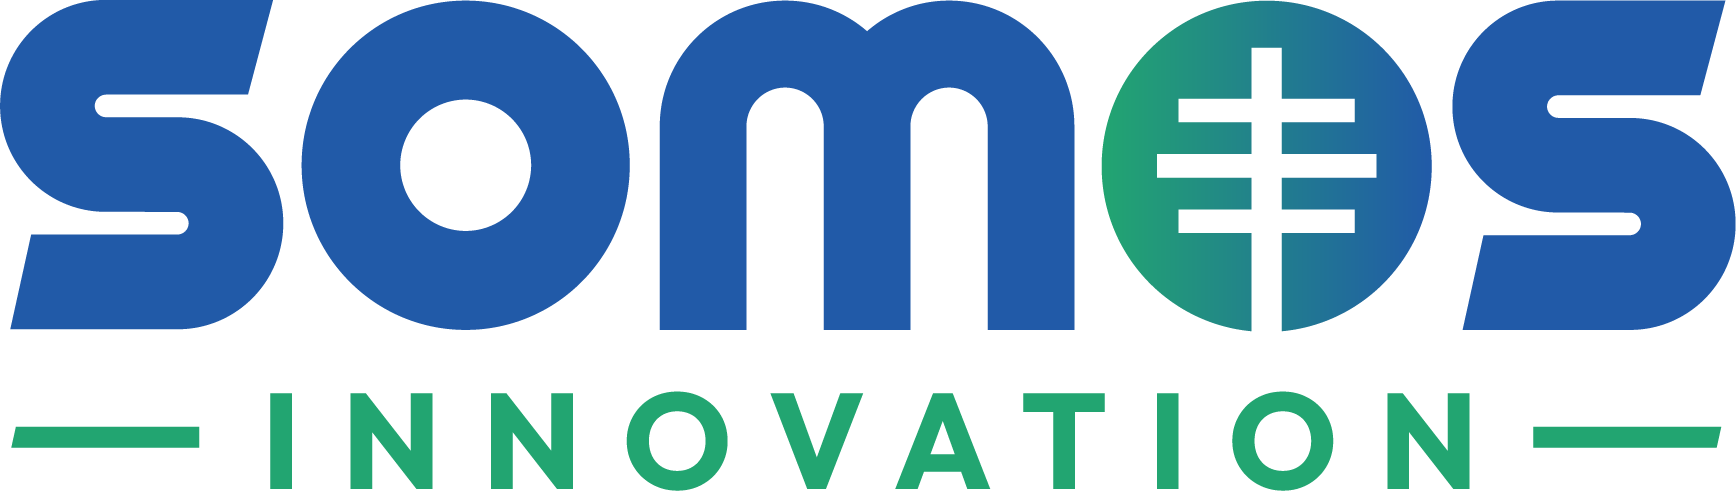 Somos Innovation Logo